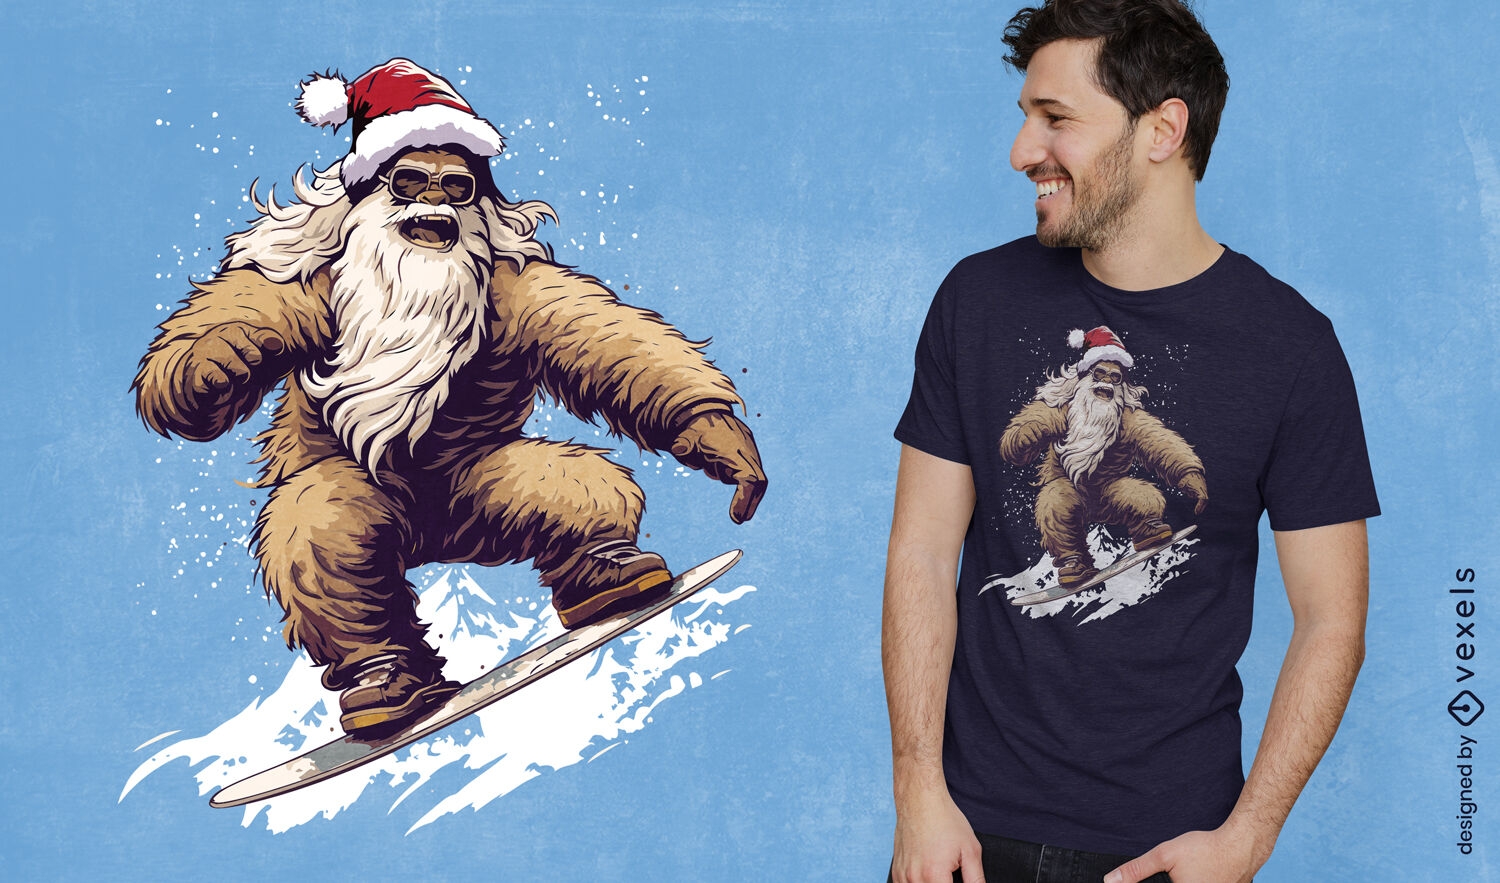 Yeti Santa Claus snowboarding adventure t-shirt design